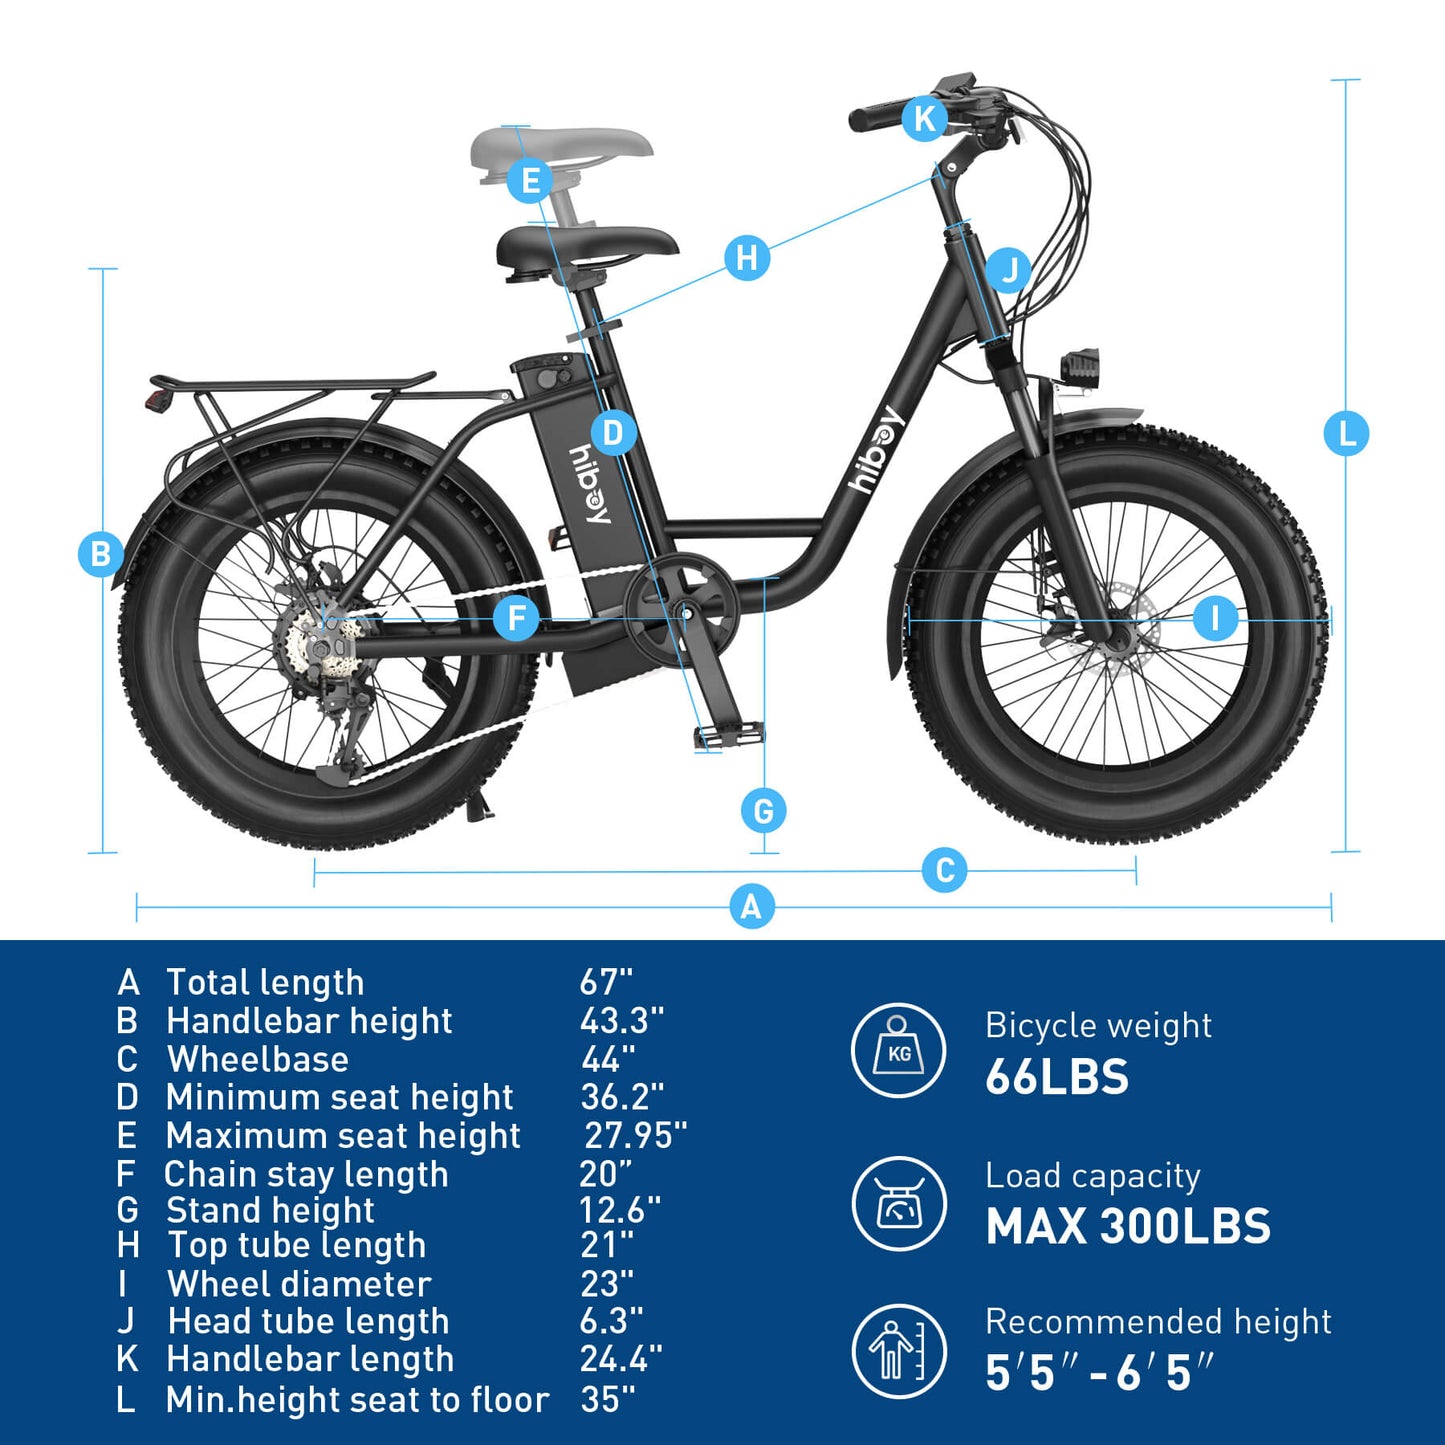 Hiboy EX6 Step-thru Fat Tire Electric Bike for traveling